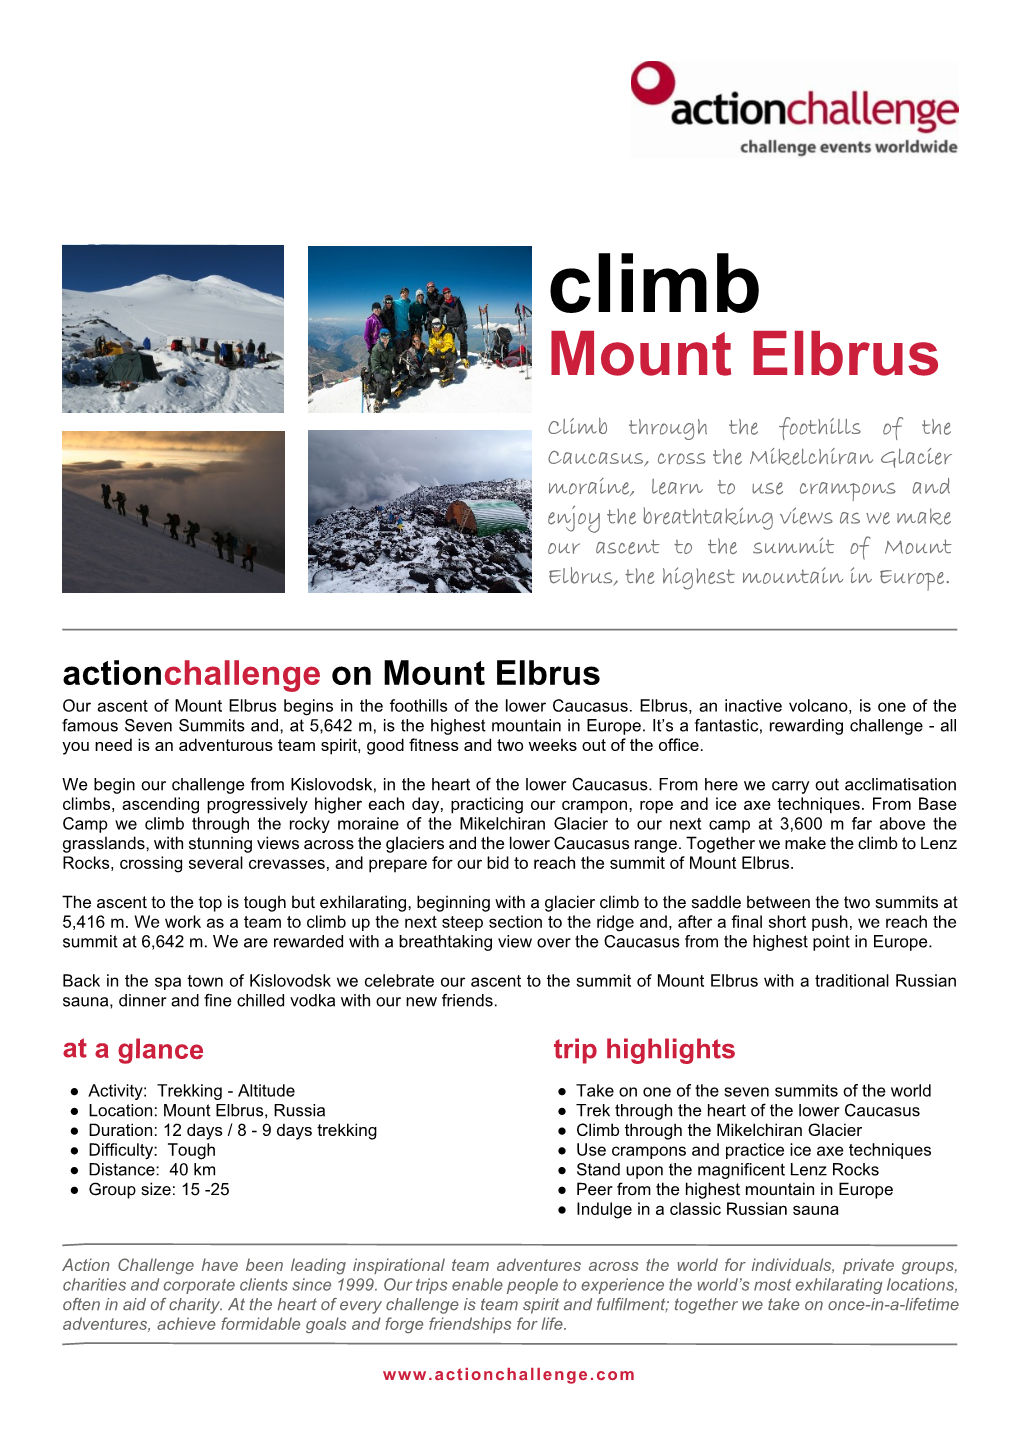 Climb Mount Elbrus